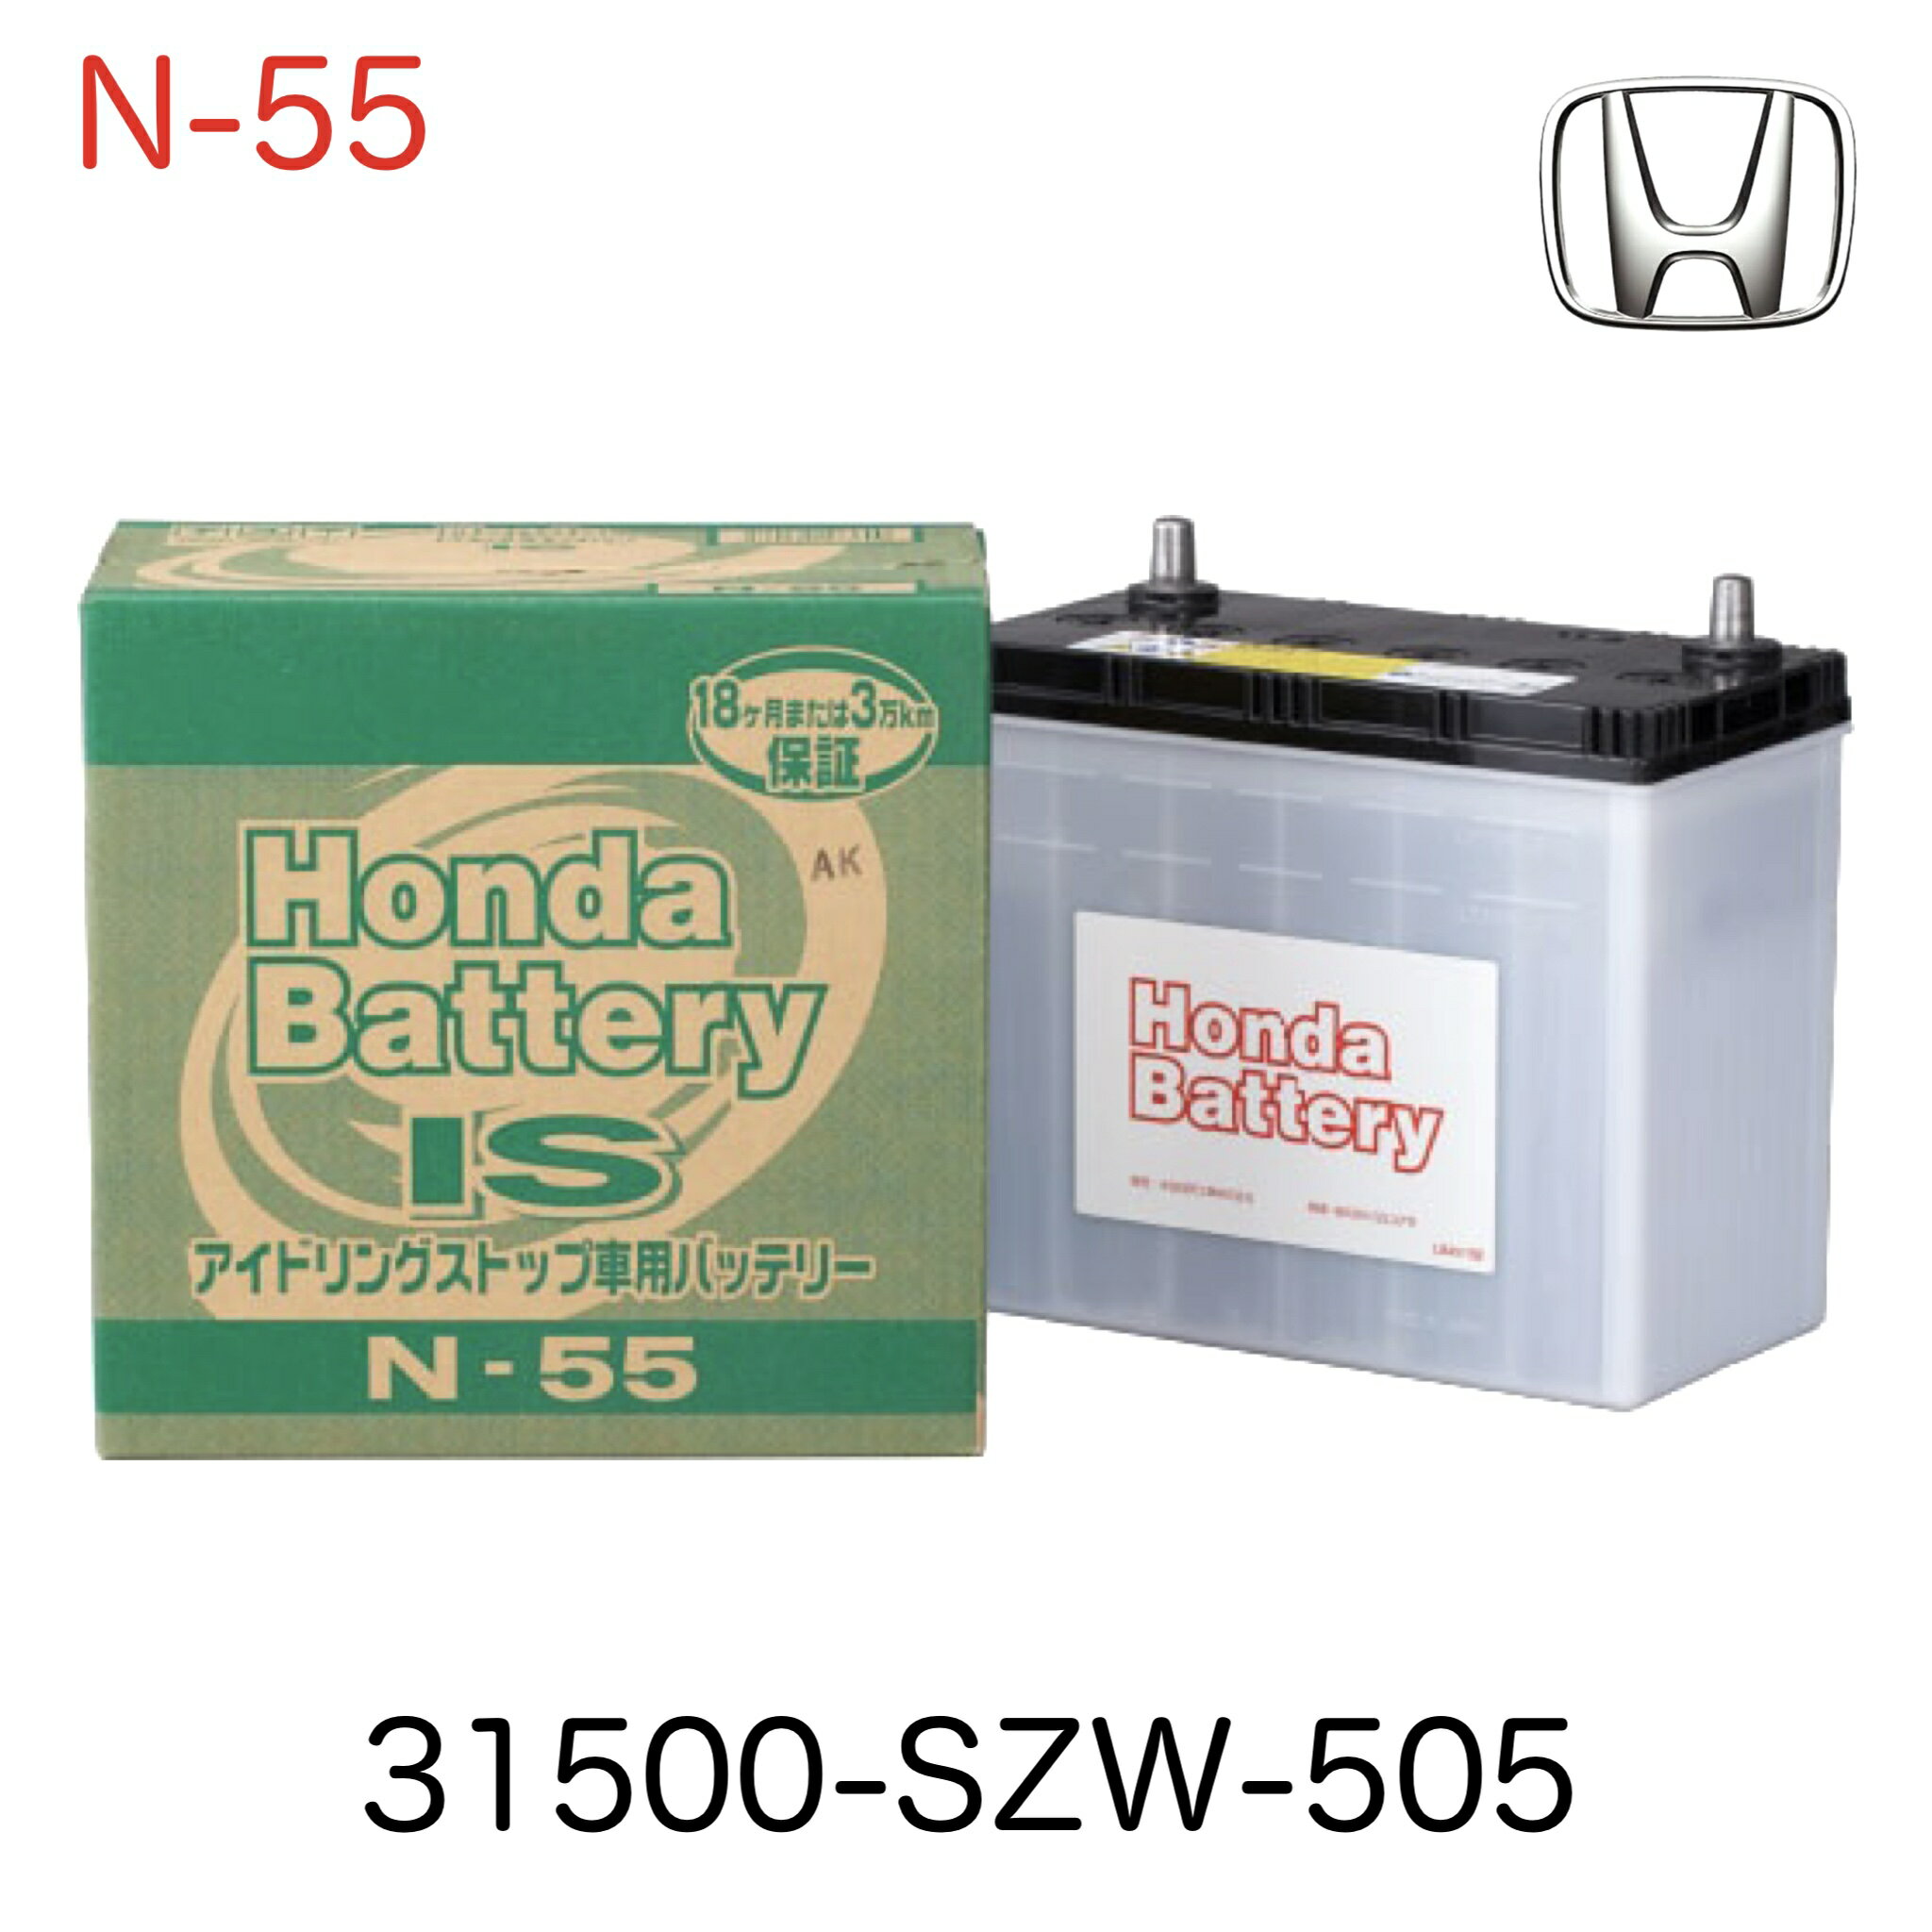 31500-SZW-505 純正 HONDA ホンダ カーバッテリー バッテリー アイドリングストップ車用 N-55 12V 18か月または3万キロ保証